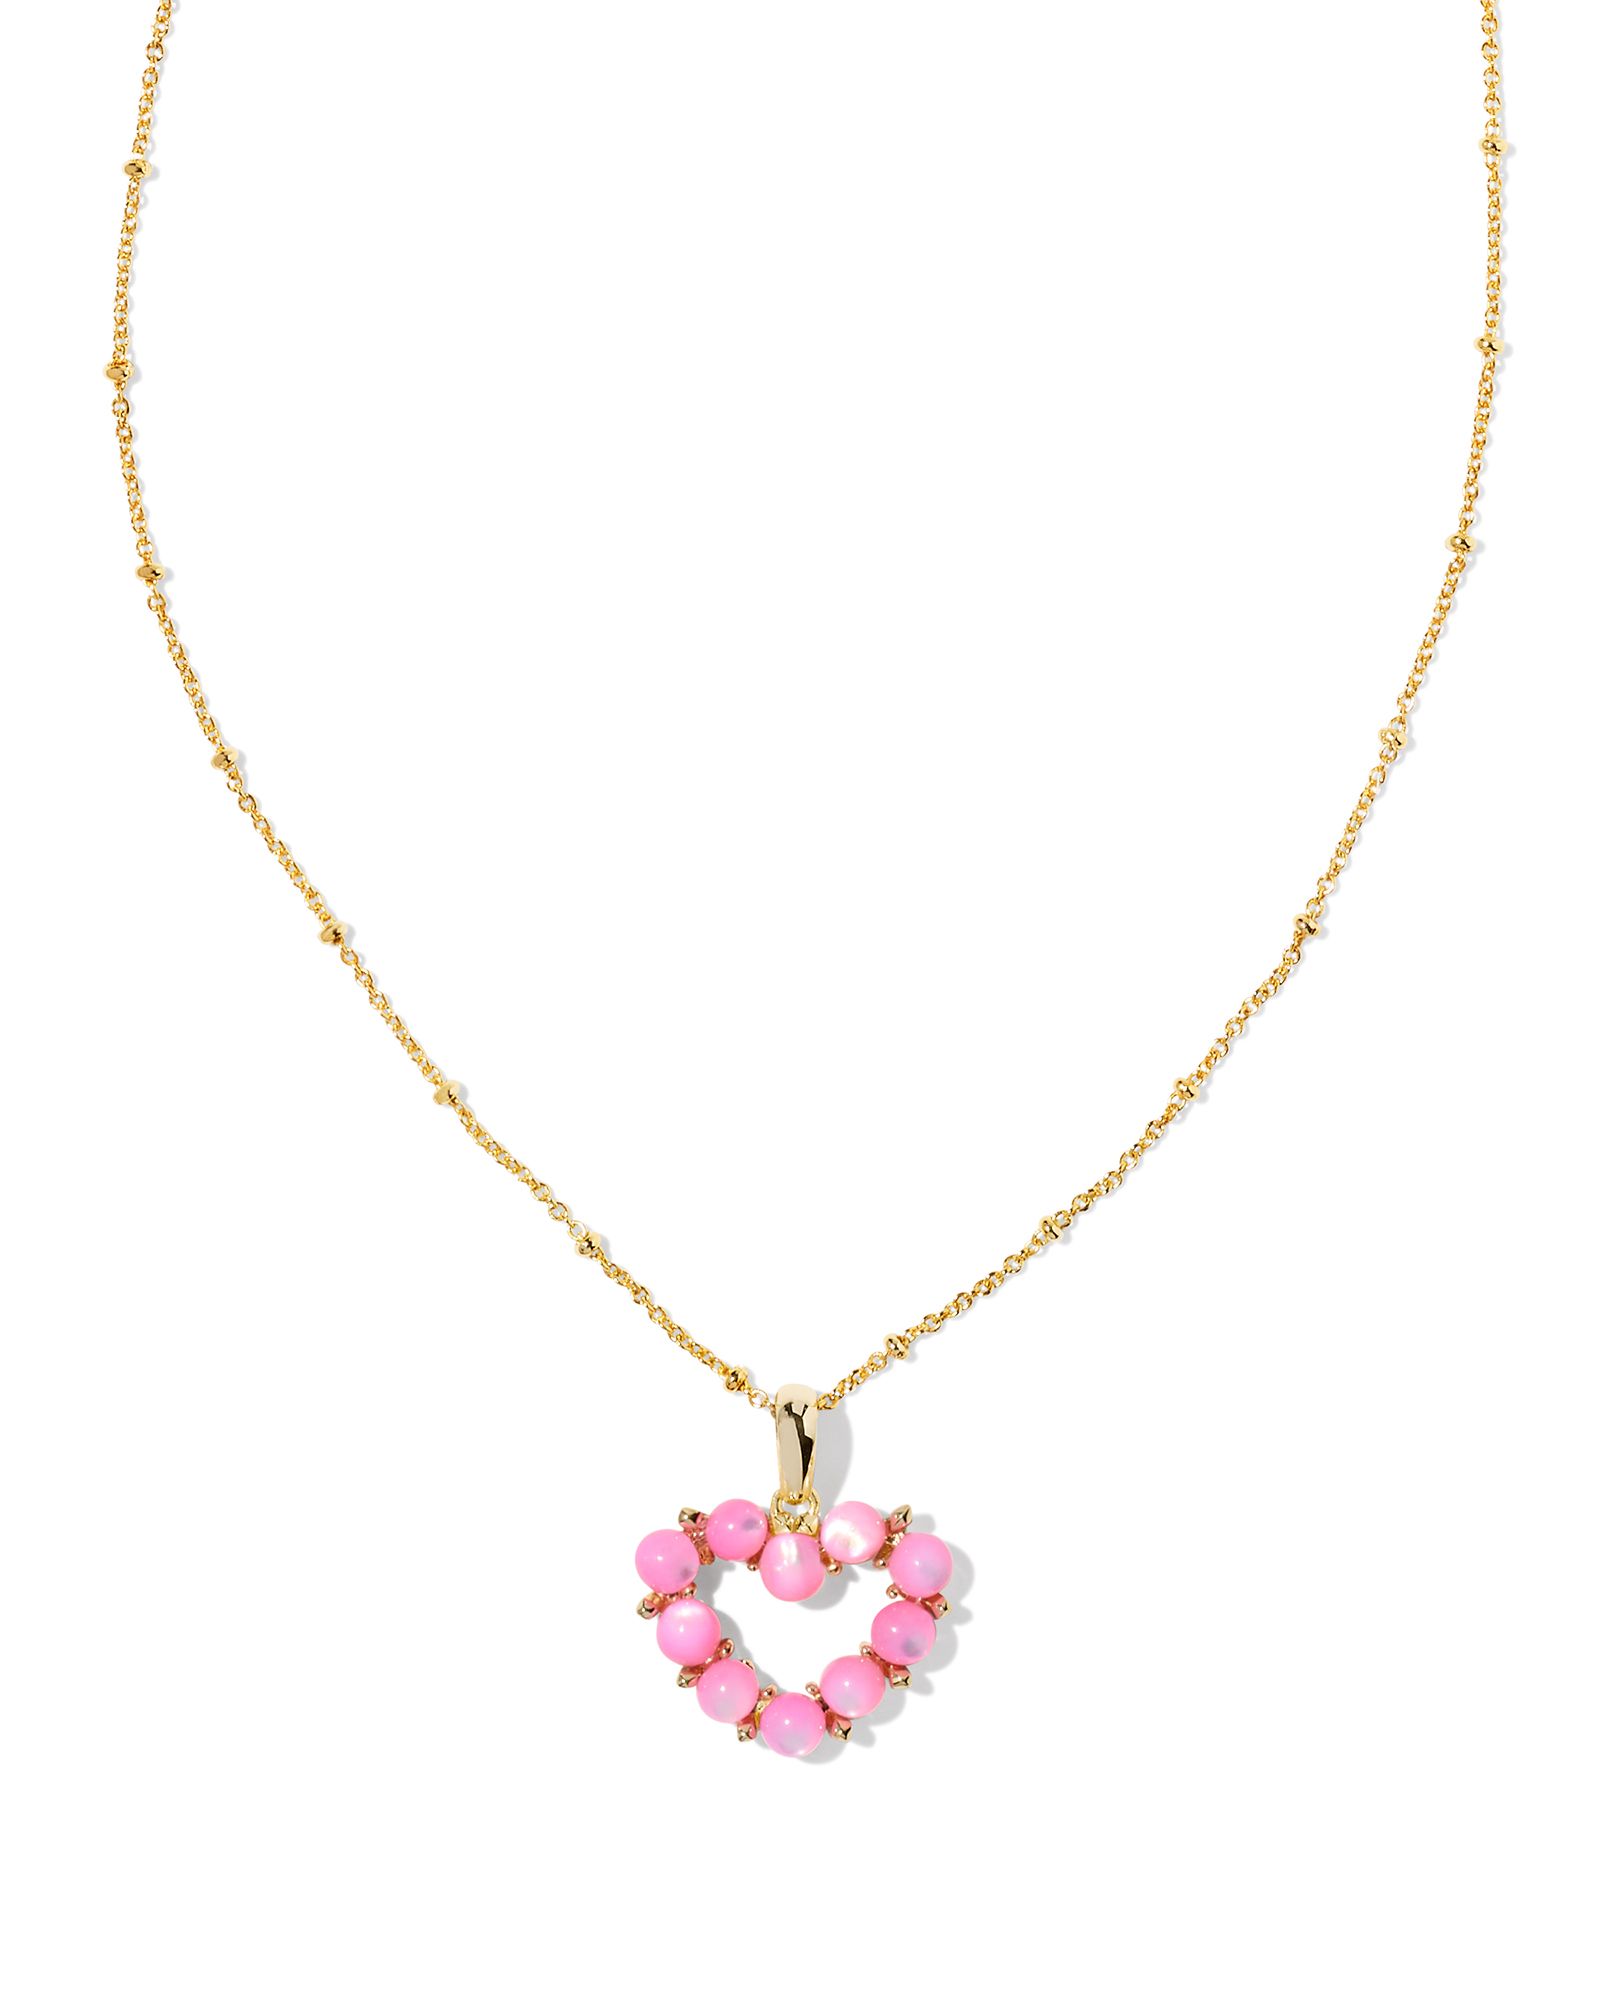 Ashton Gold Heart Short Pendant Necklace in Blush Ivory Mother-of-Pearl | Kendra Scott